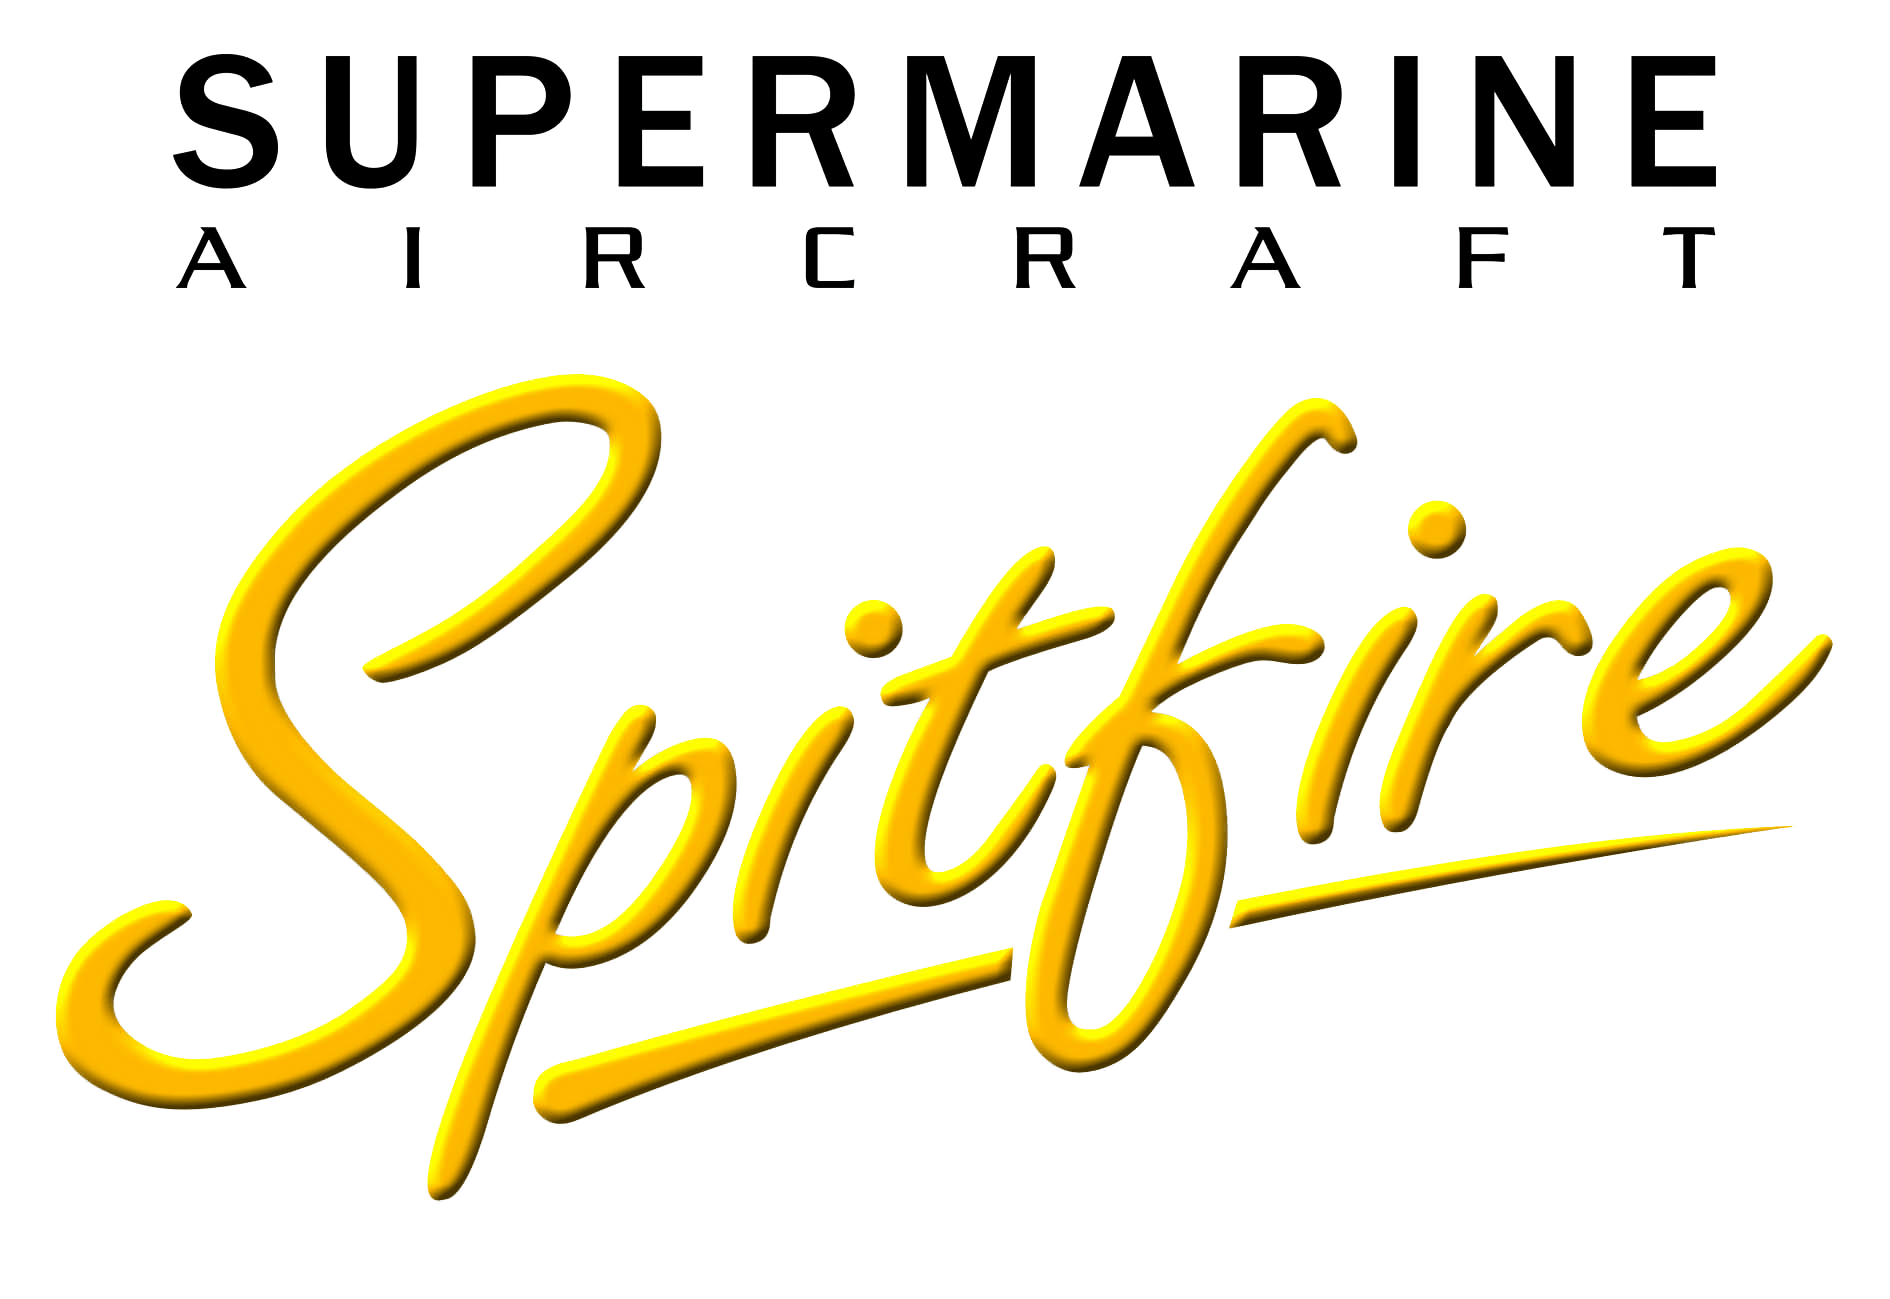 Spitfire Plane Logo - Supermarine Aircraft About us